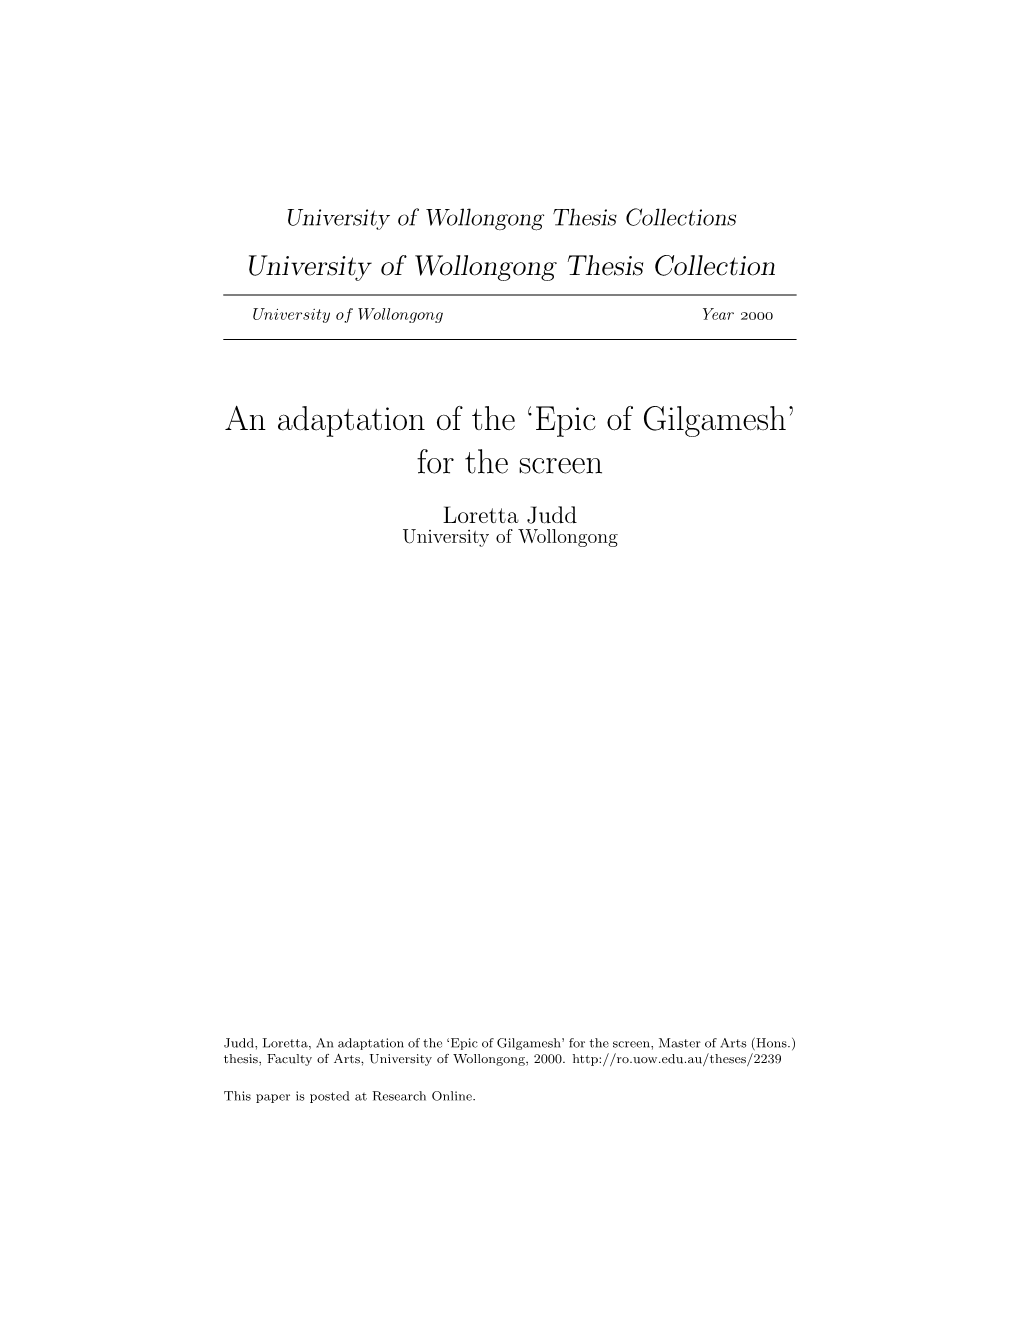 Epic of Gilgamesh’ for the Screen Loretta Judd University of Wollongong